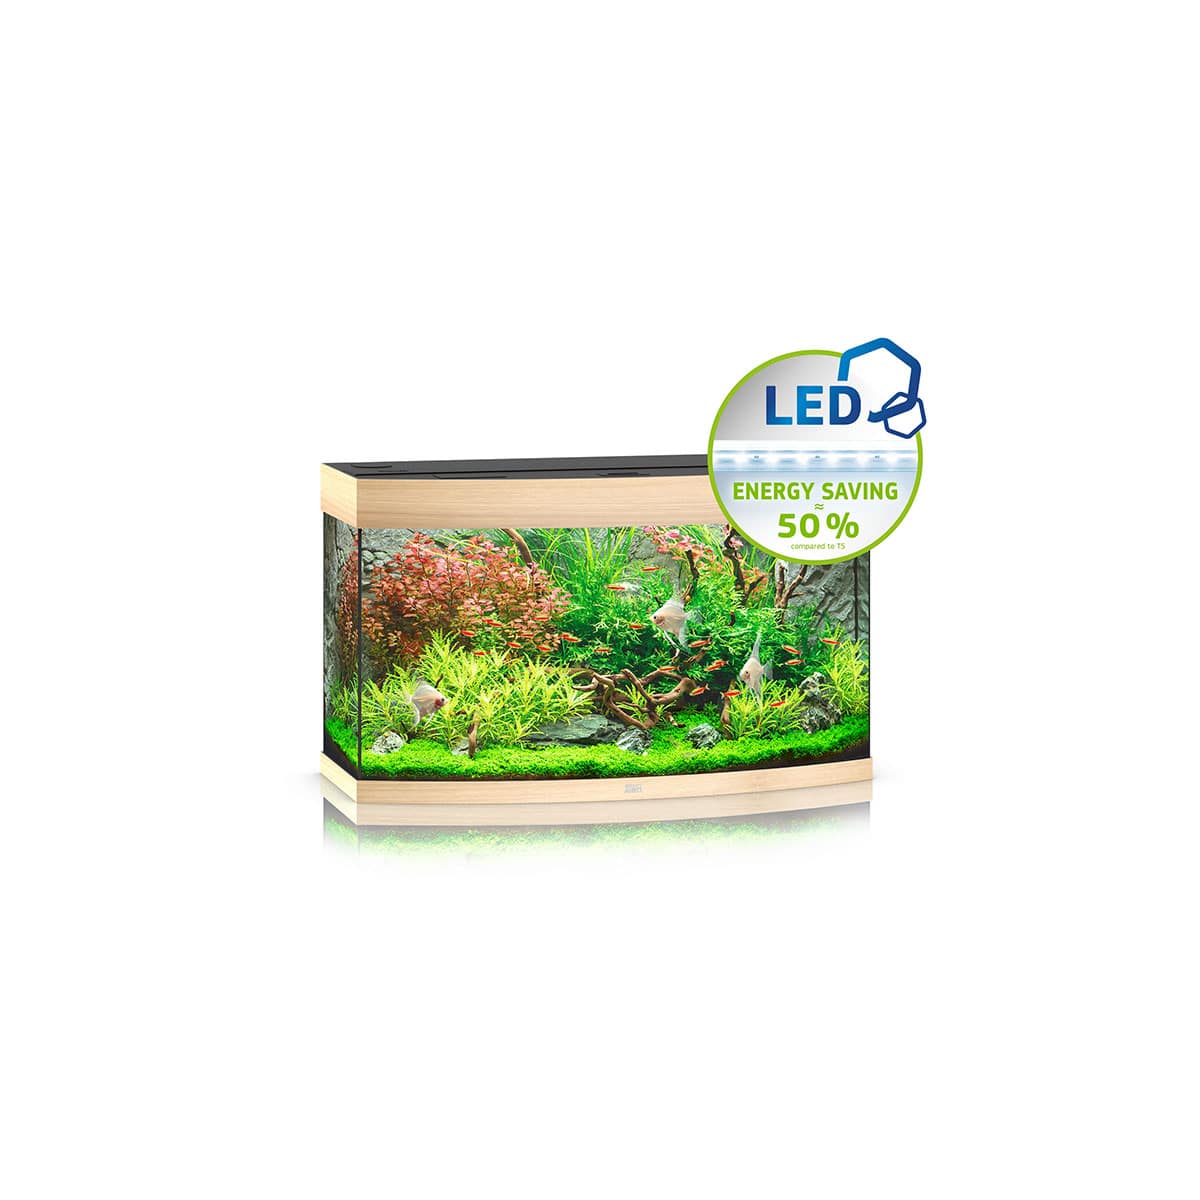 Juwel Komplett-Aquarium Vision 180 LED ohne Unterschrank helles holz